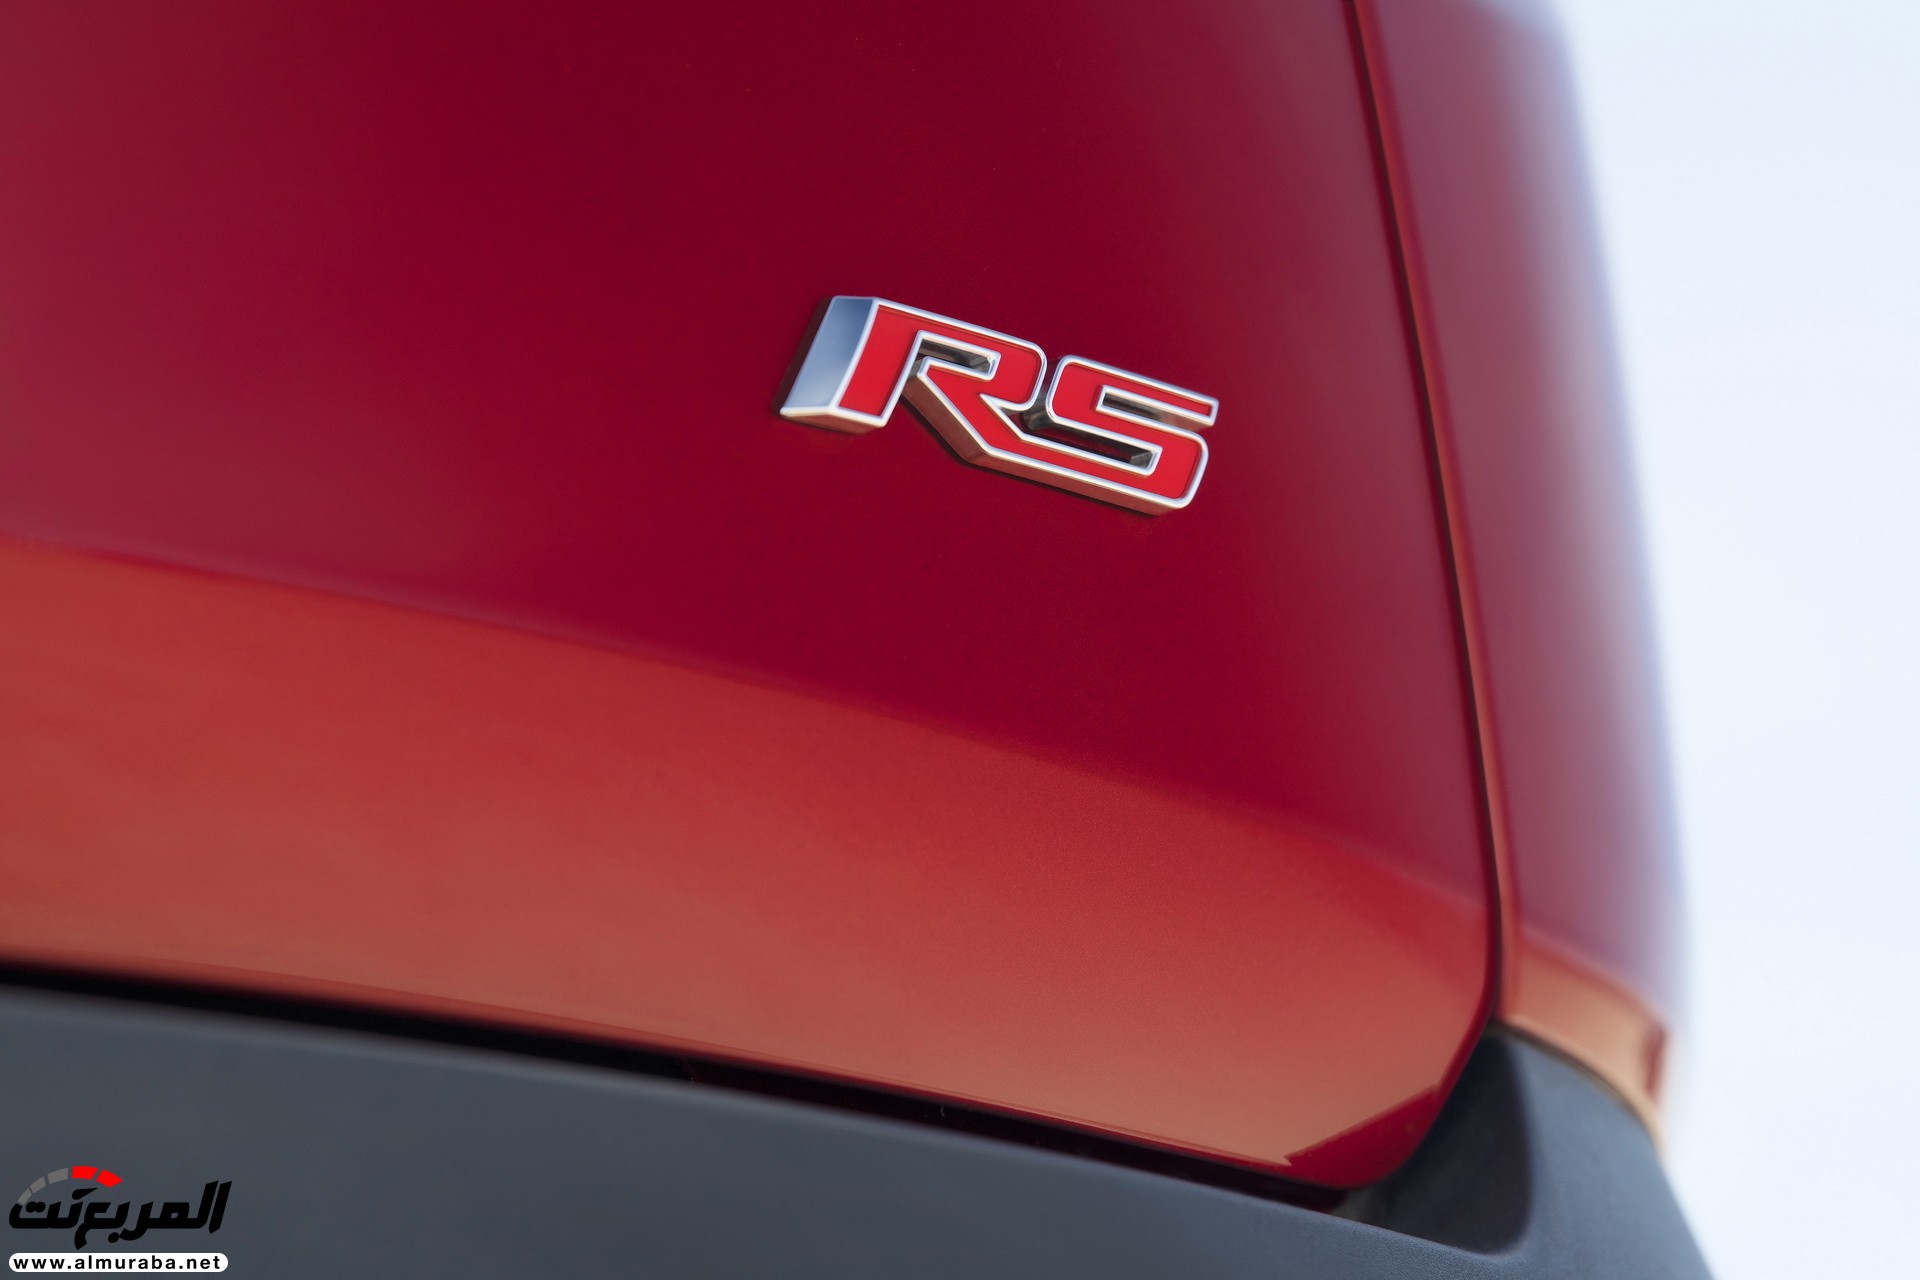 شيفروليه ترافيرس 2018 إصدار RS يظهر رسمياً بشكل رياضي 3